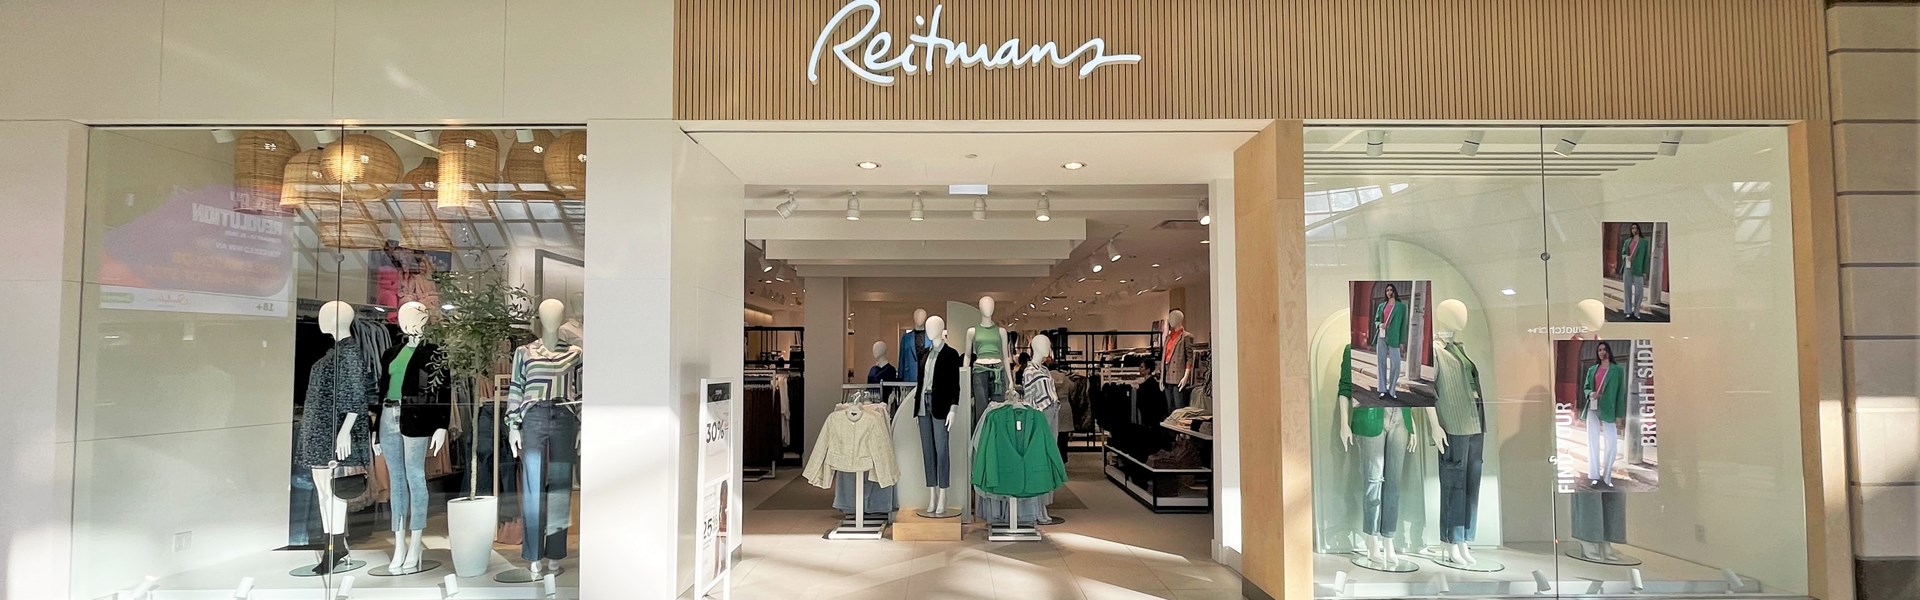 Reitmans | West Edmonton Mall